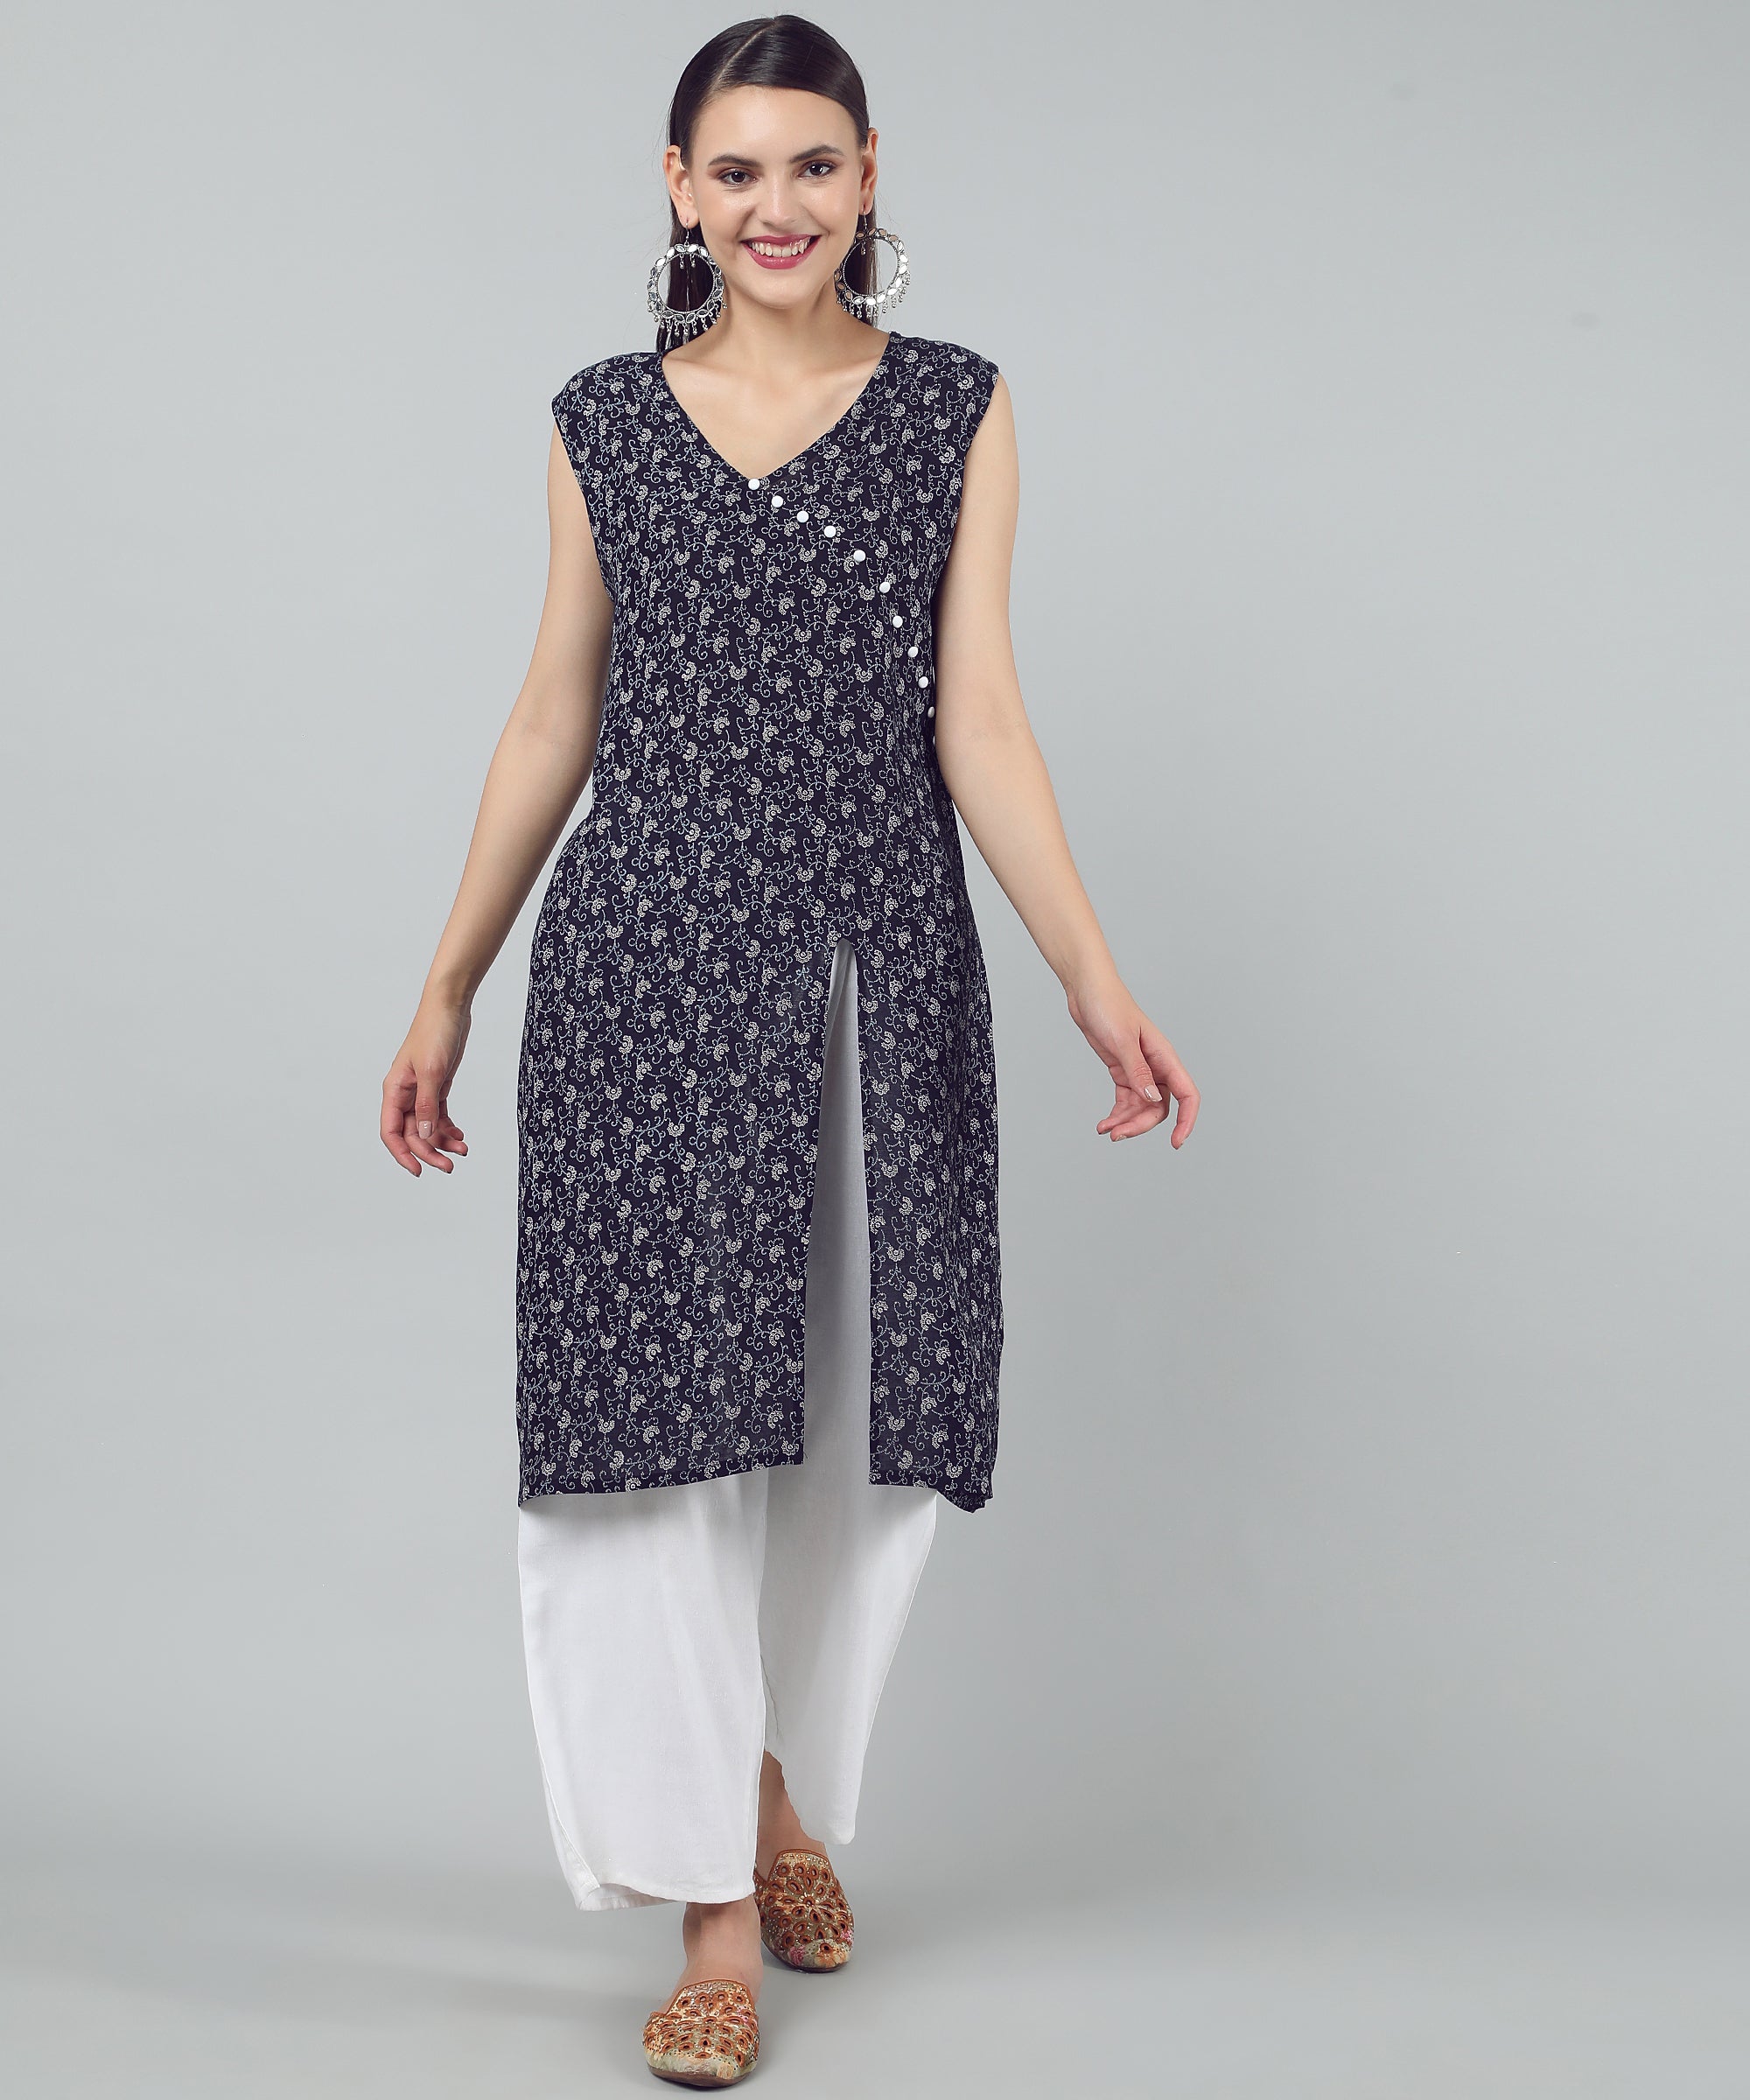 Slit Kurti: Traditional Yet Fashionable Outfit For Women by Reetafashion -  Issuu